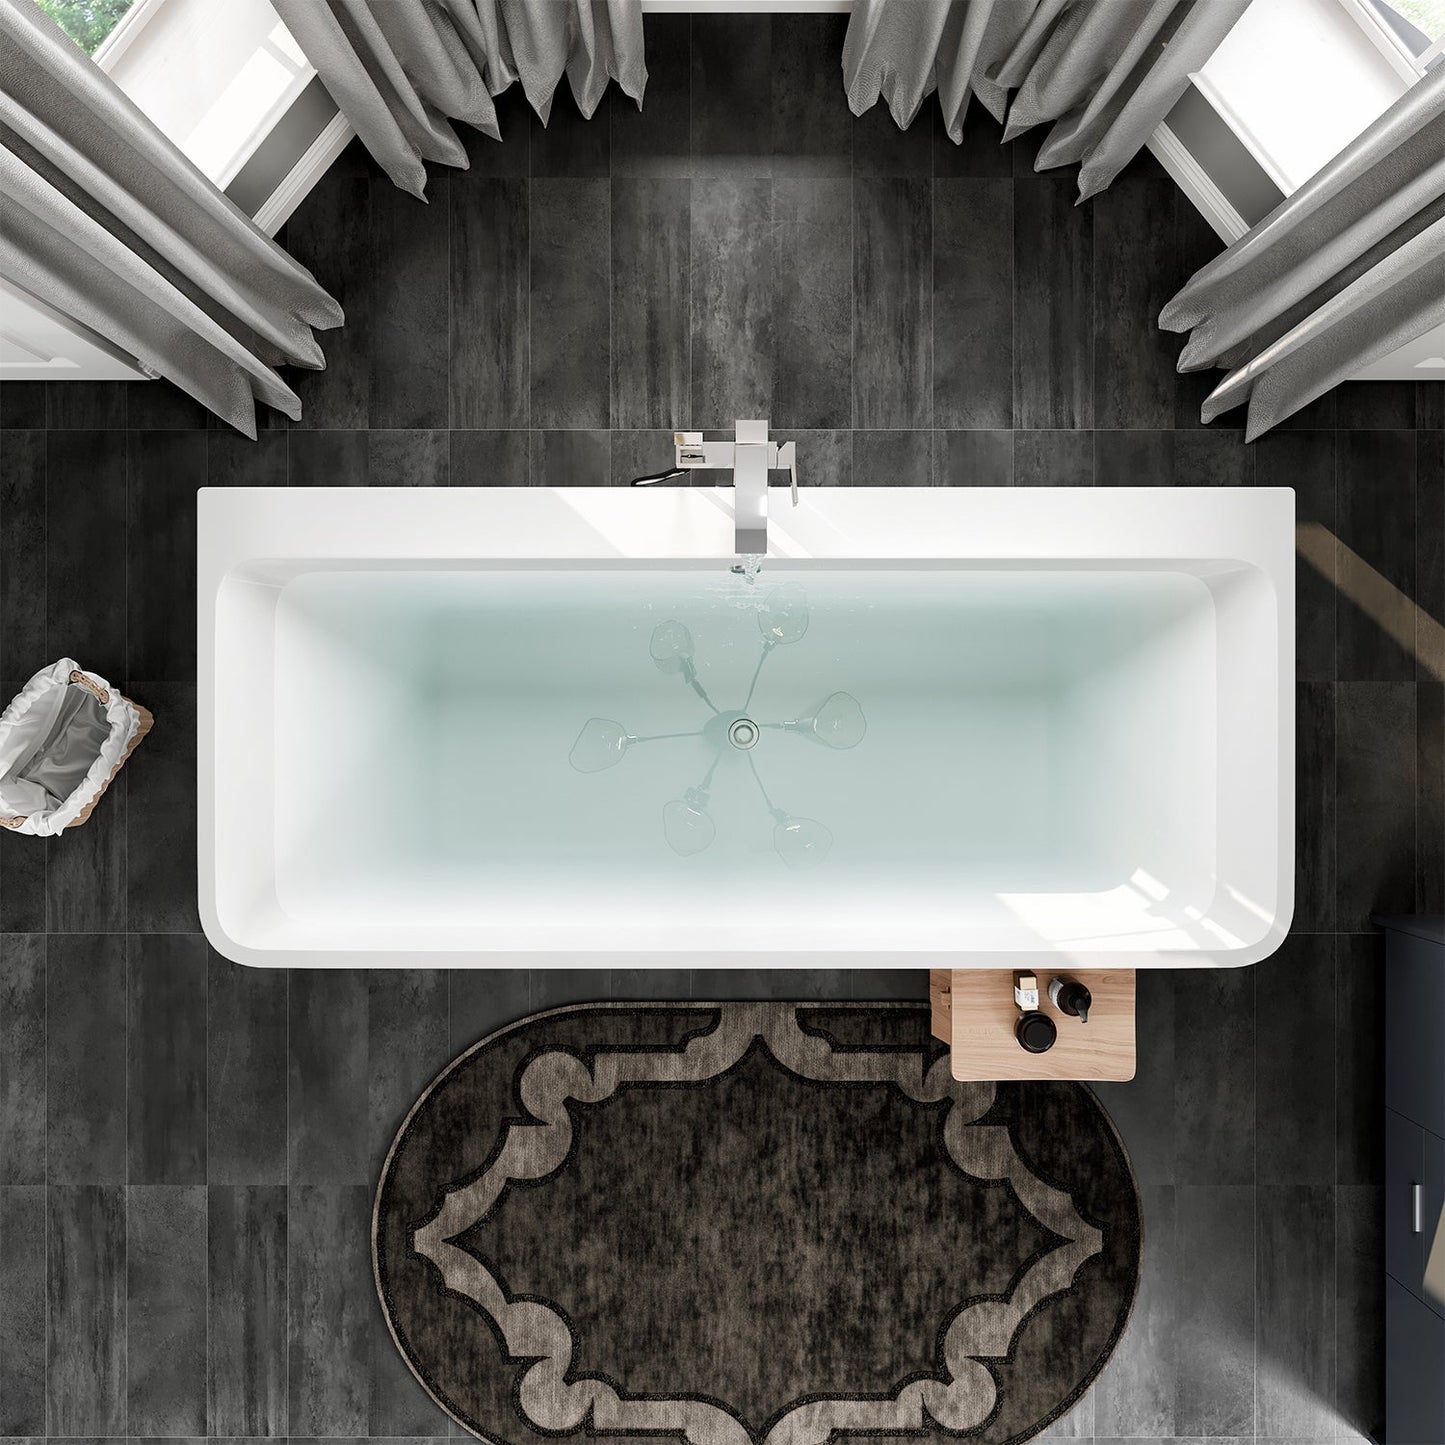 Eviva Essence 60 inch White Acrylic Free Standing Bathtub